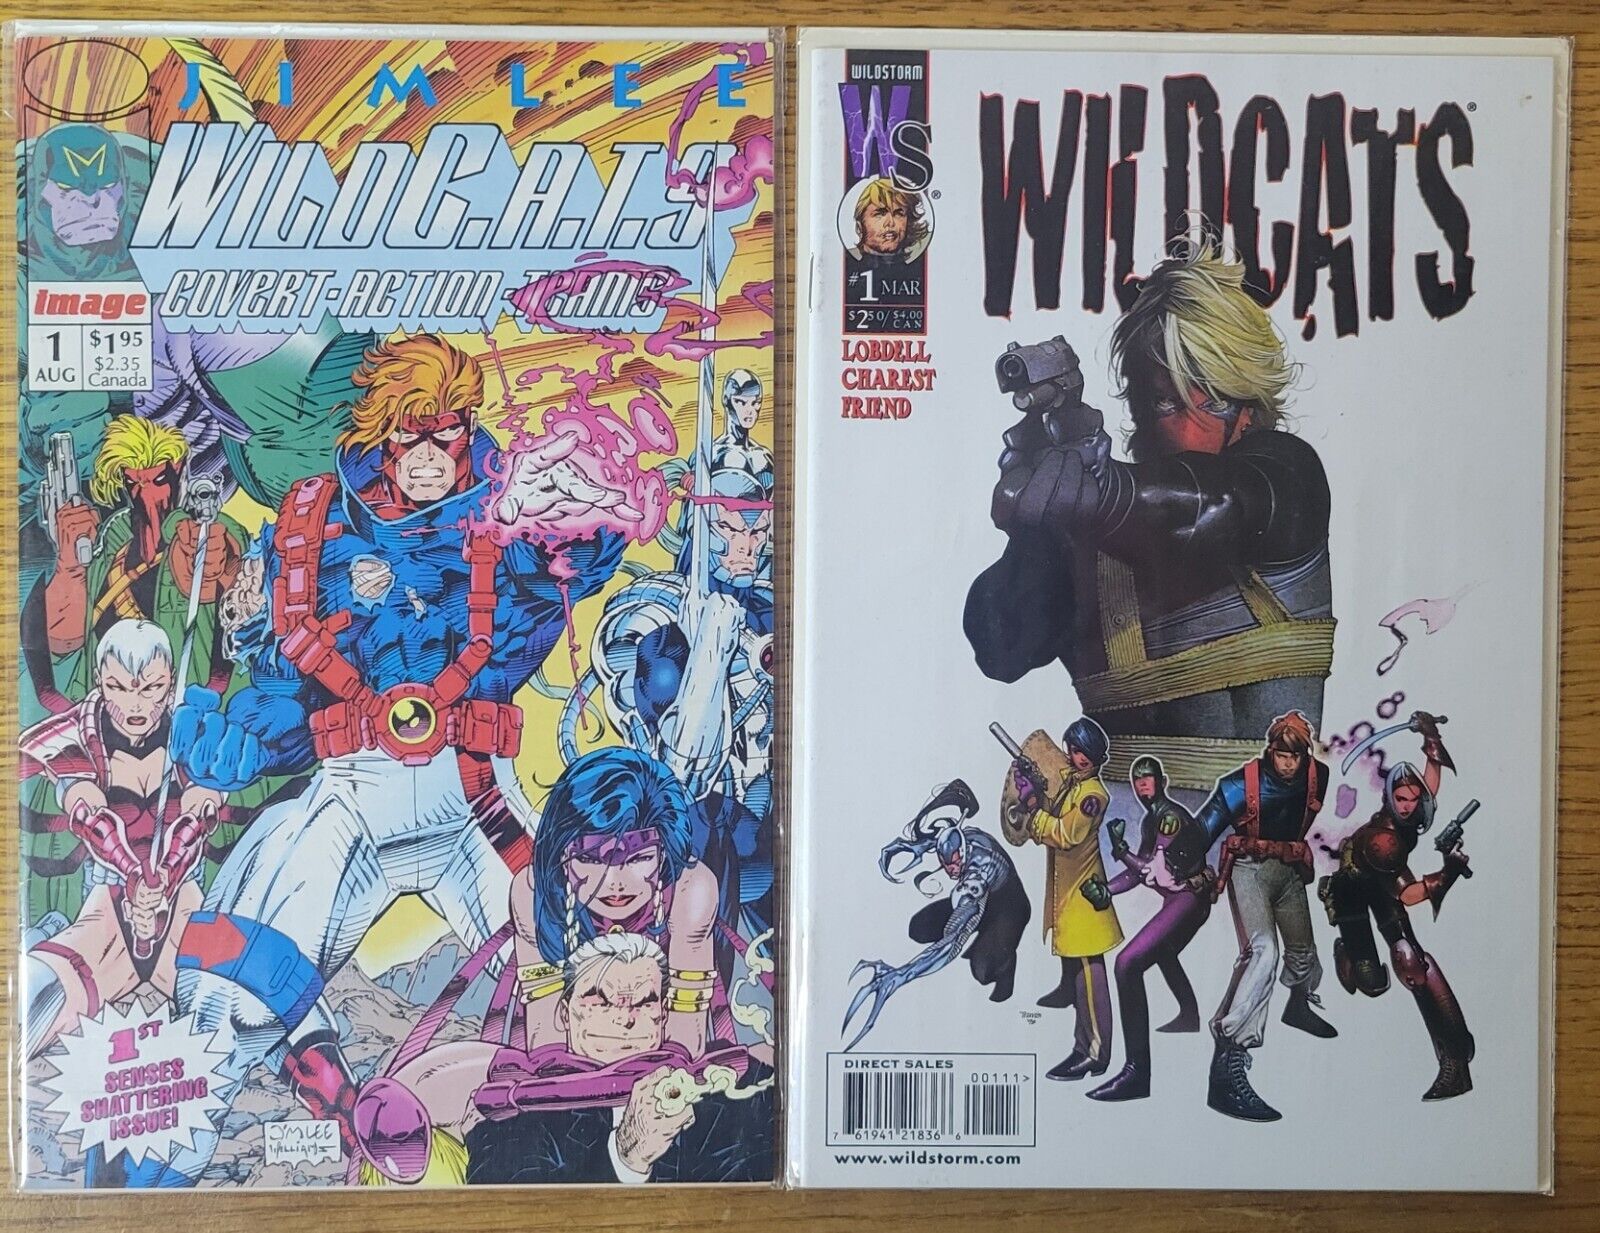 WildC.A.T.S. #1 1992 and WildCats #1 1999 Image Wild Storm Comics